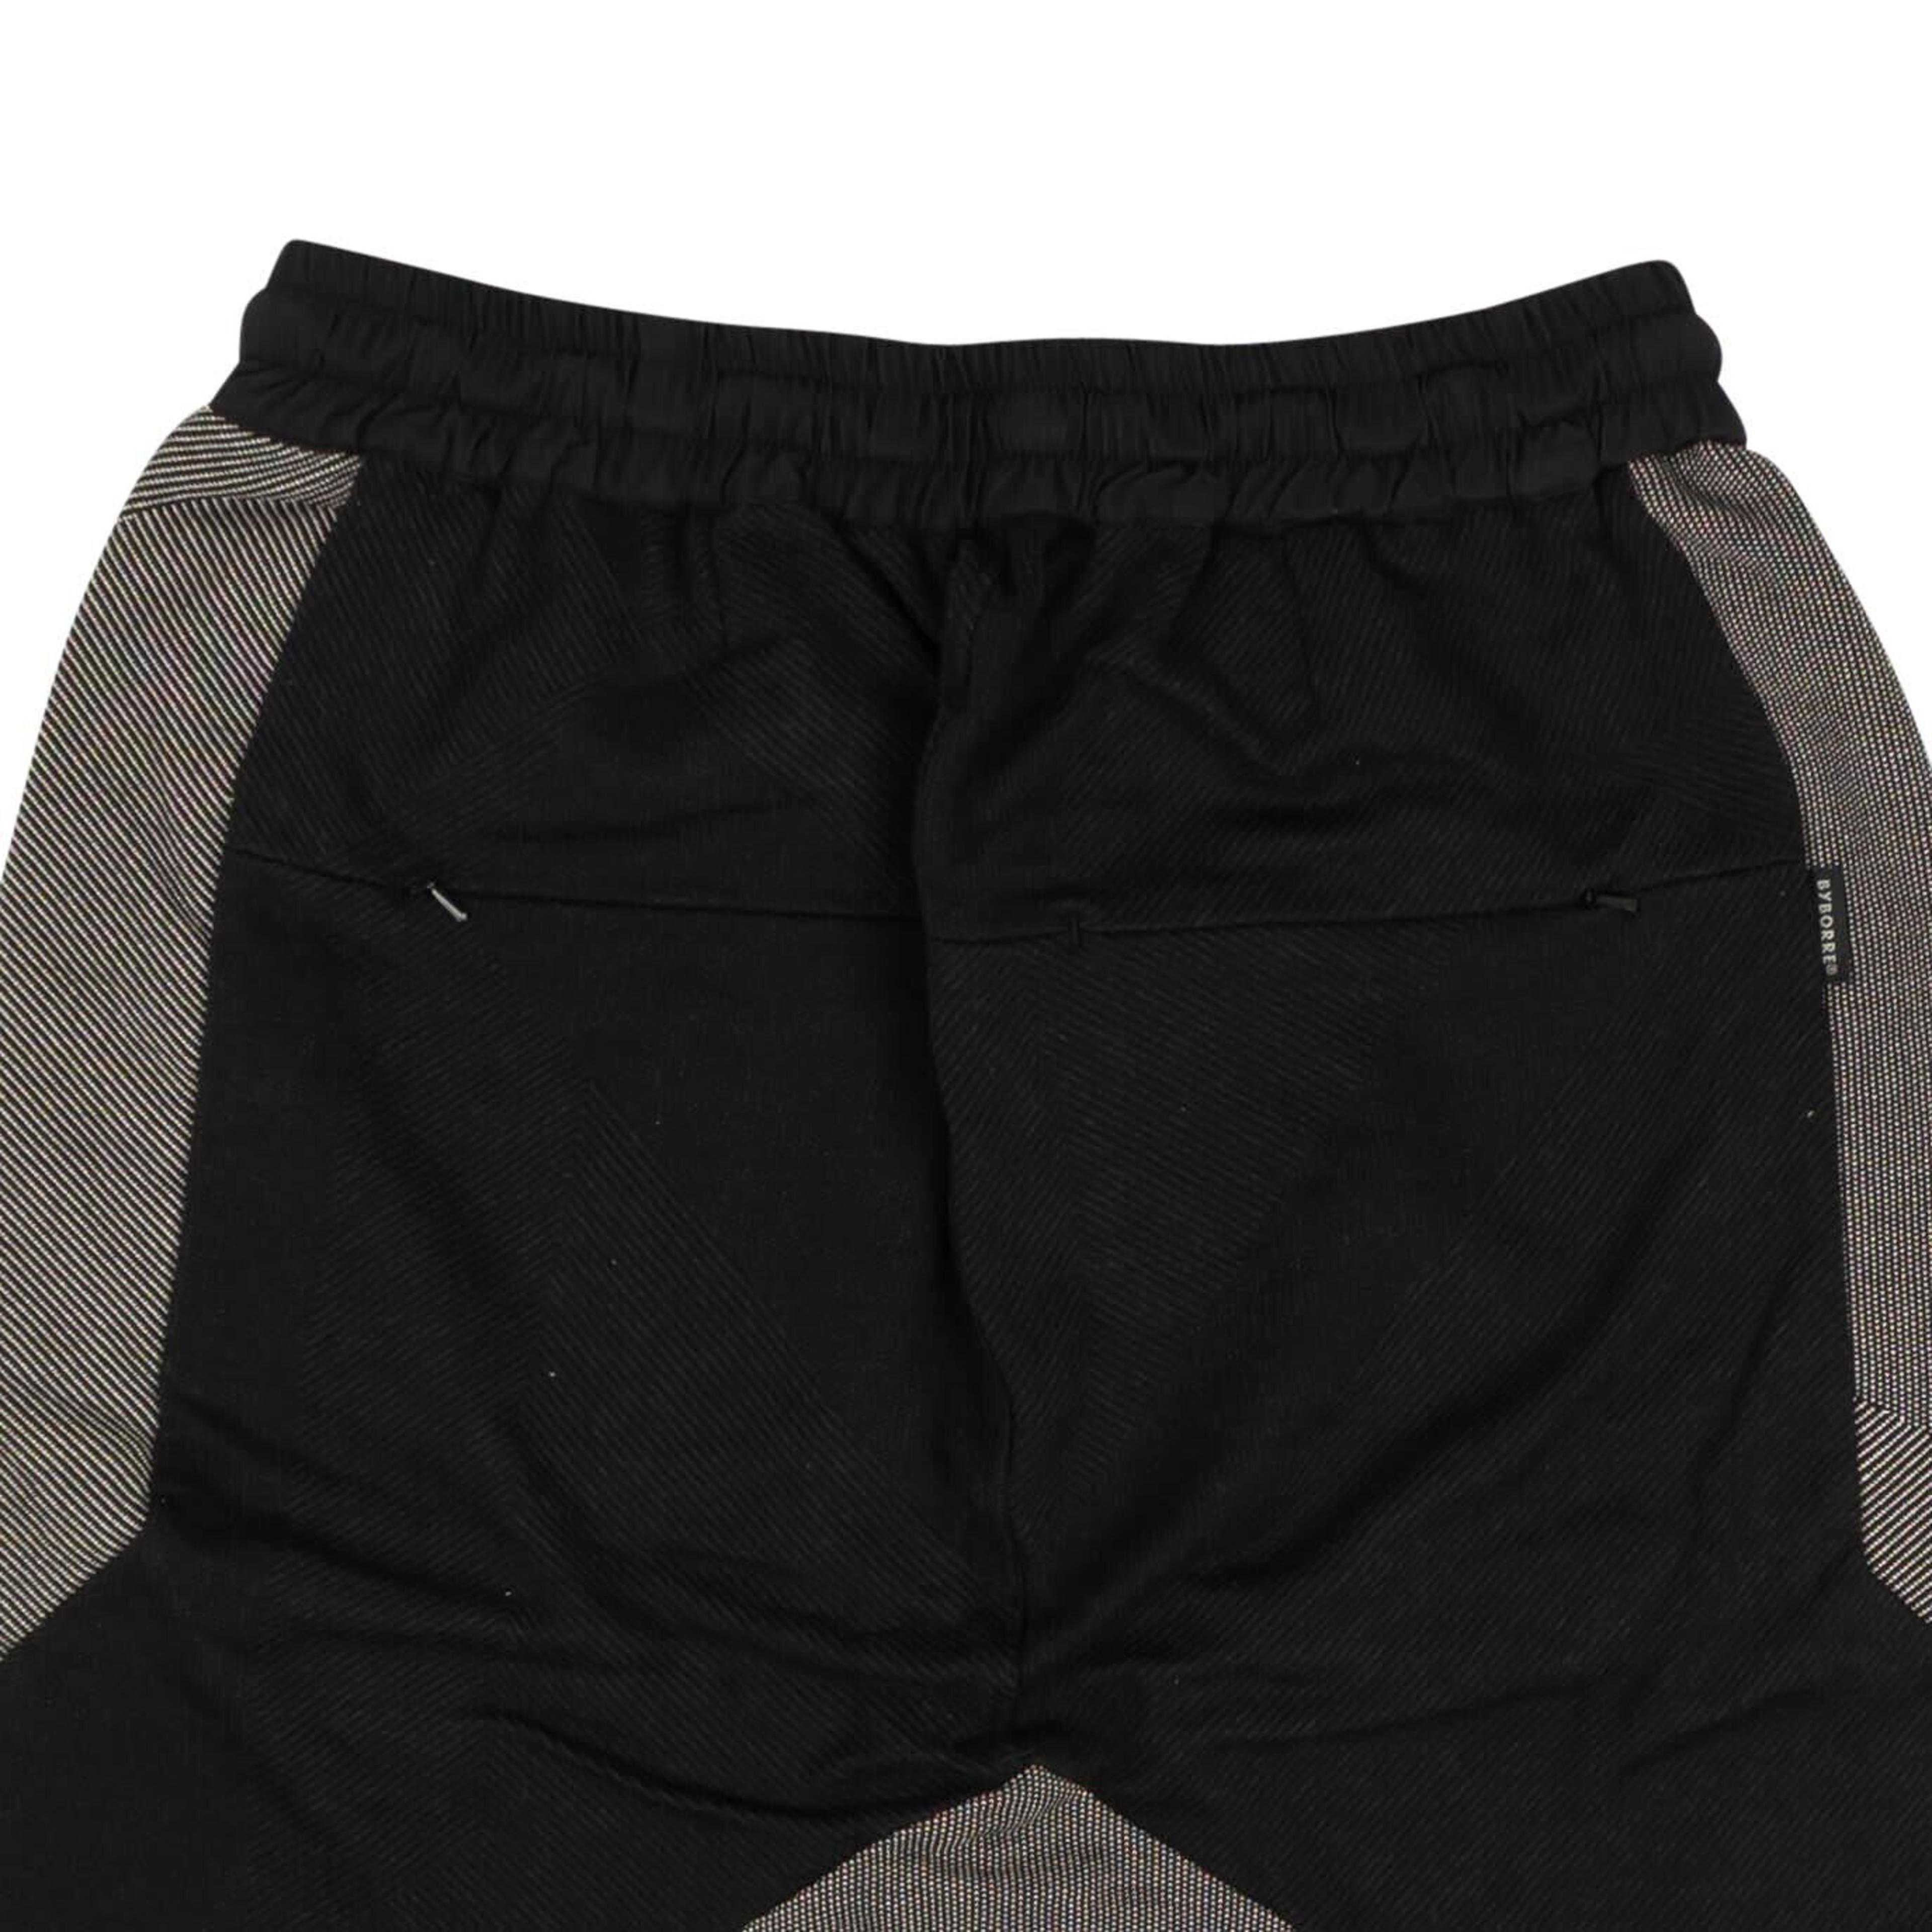 Alternate View 3 of Black Woven B1 Shorts